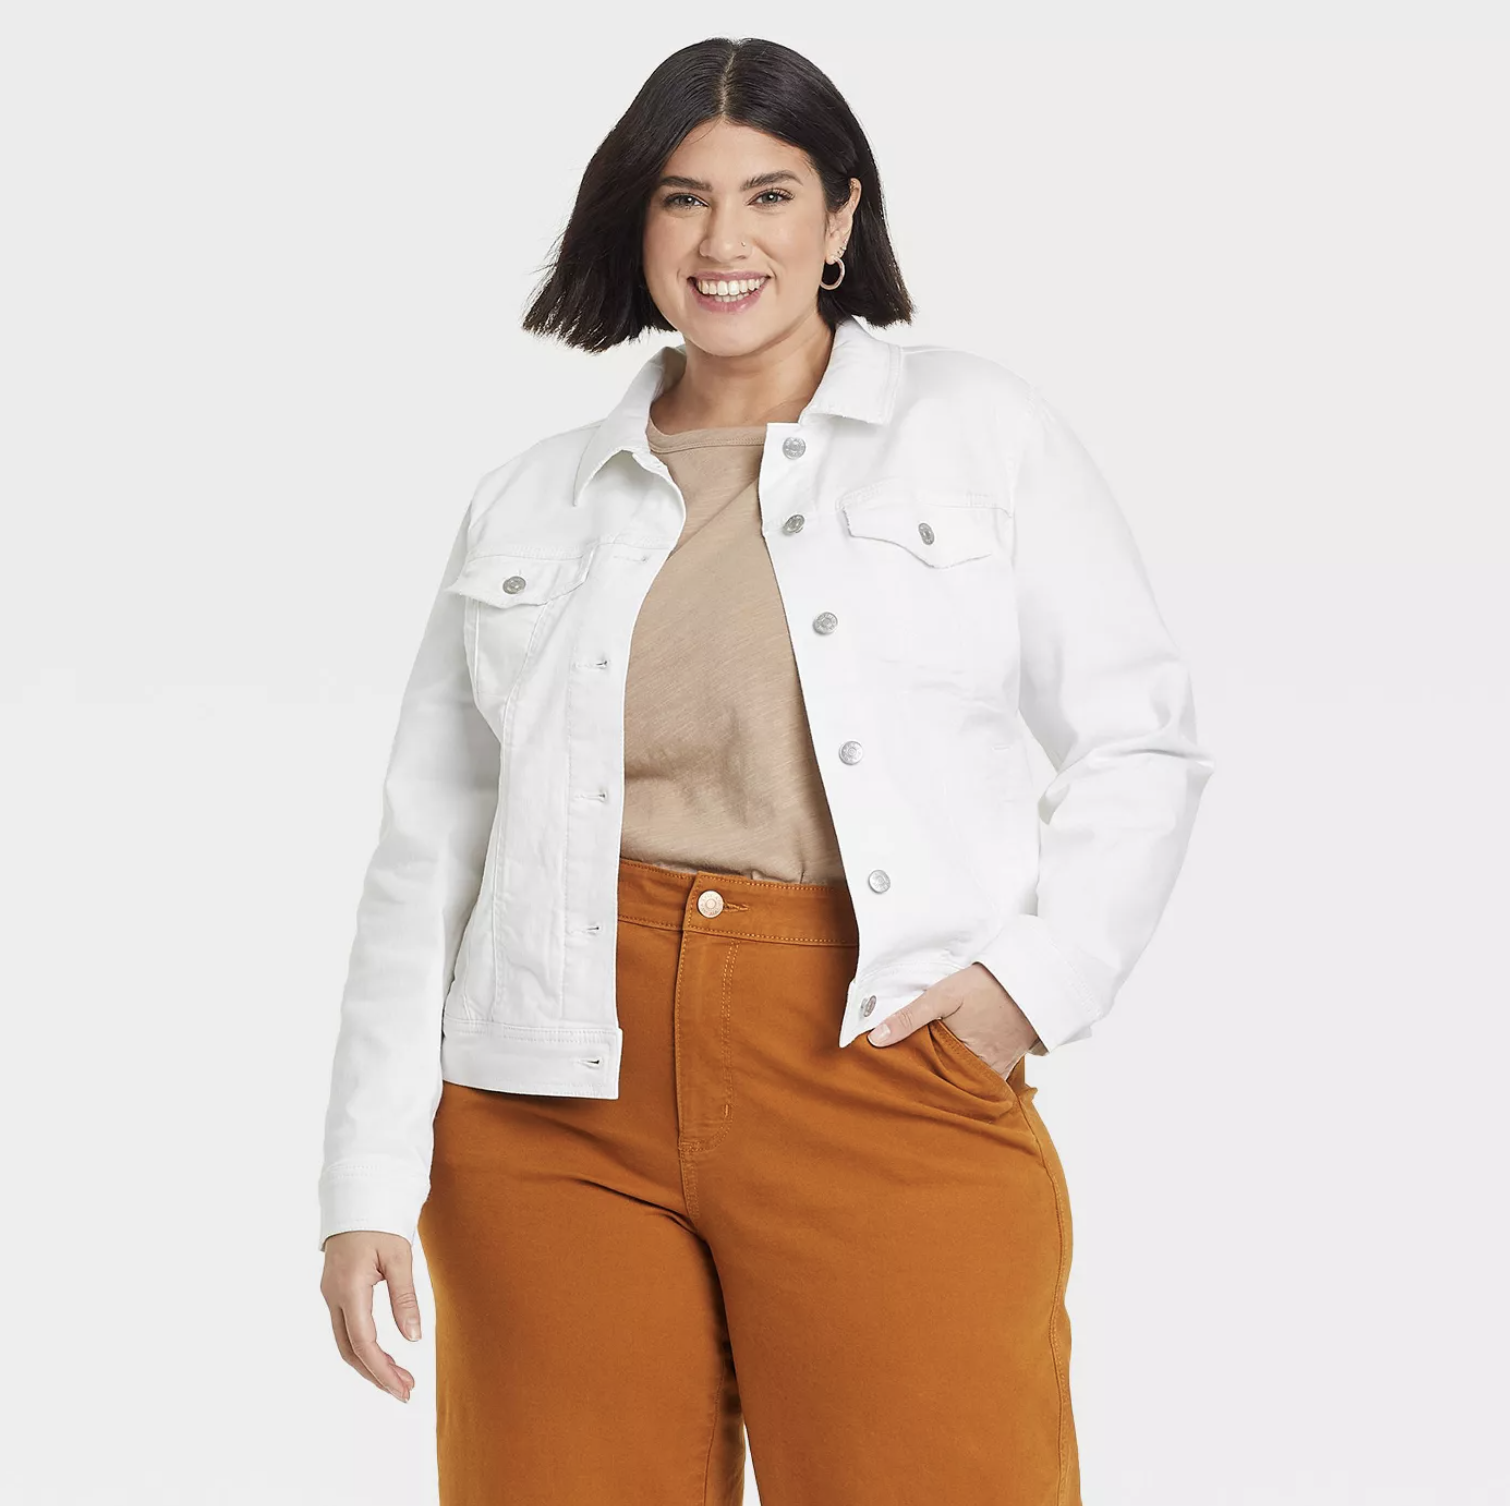 model wearing the jacket in white